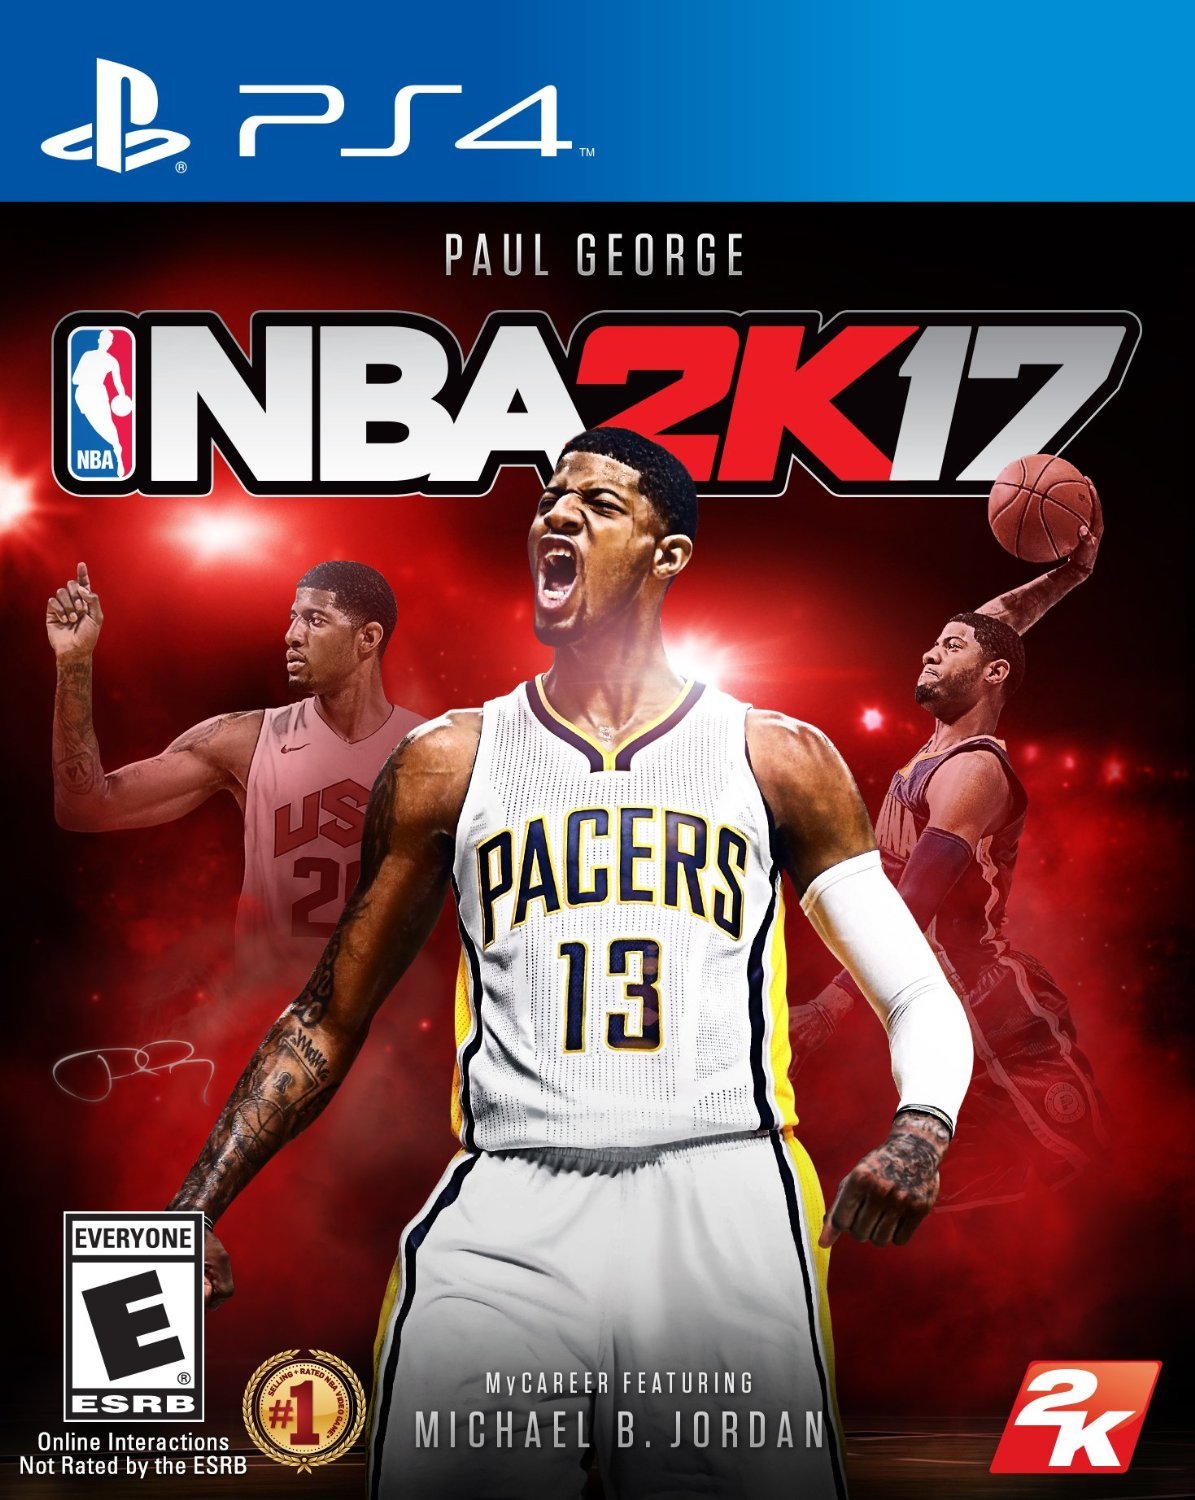 NBA 2K17 video game